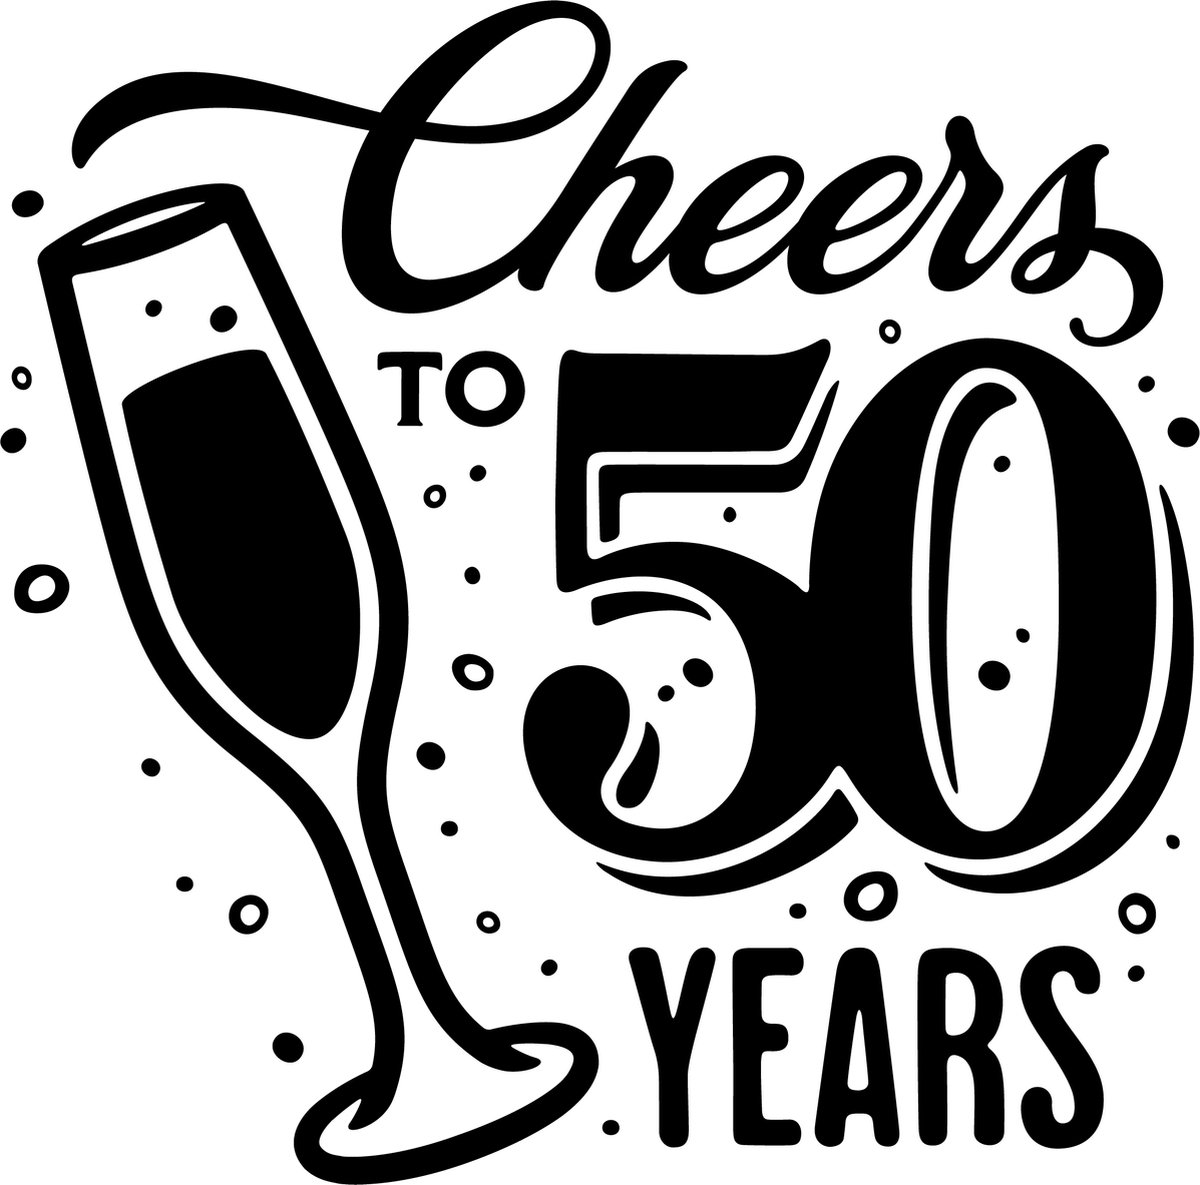 Sticker - Cheers to 50 years - 30x30cm - wit - 1 stuks - stickers - verjaardag - verjaardag decoratie - verjaardag versiering - feest - feest versiering - feestartikelen - raamstickers - raamsticker - Stickers volwassenen